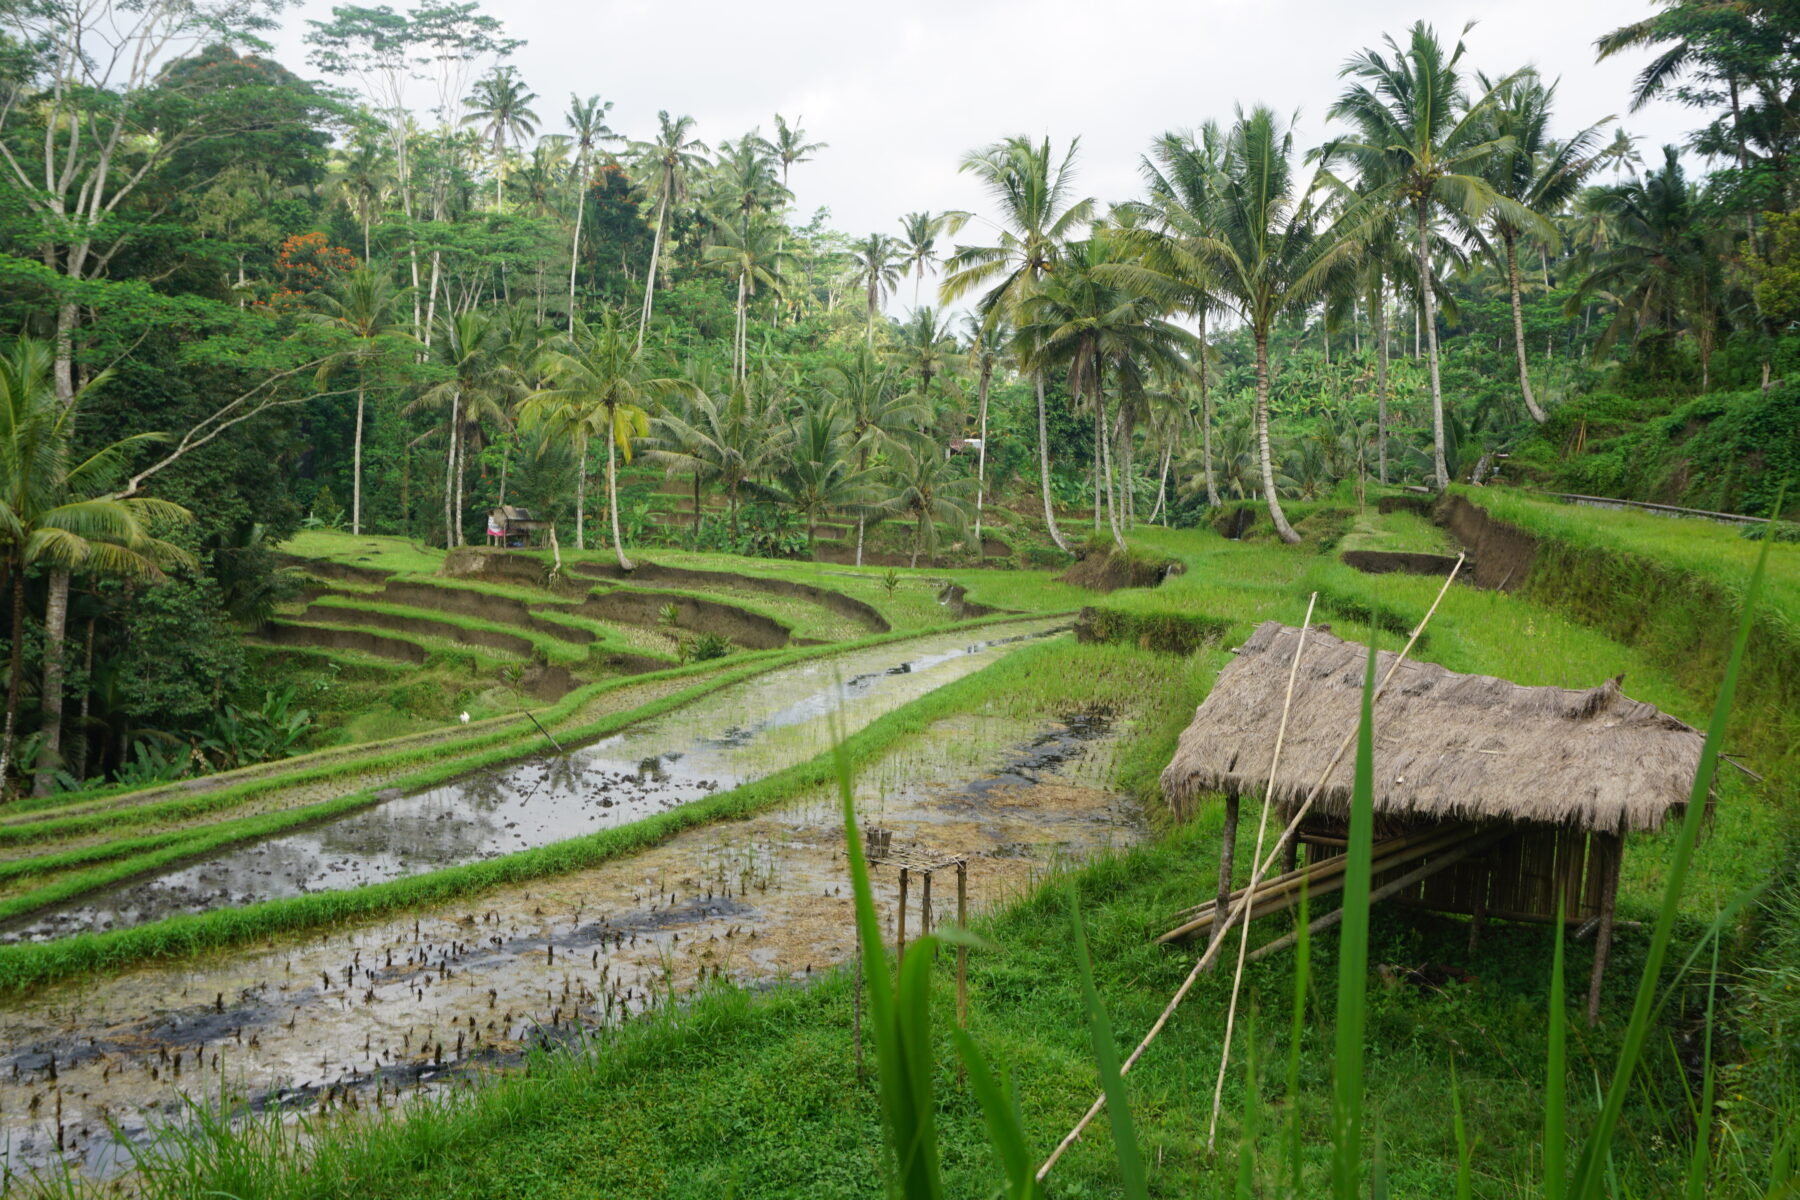 Indonesia - Bali, Gunung Kawi Rice Terrace